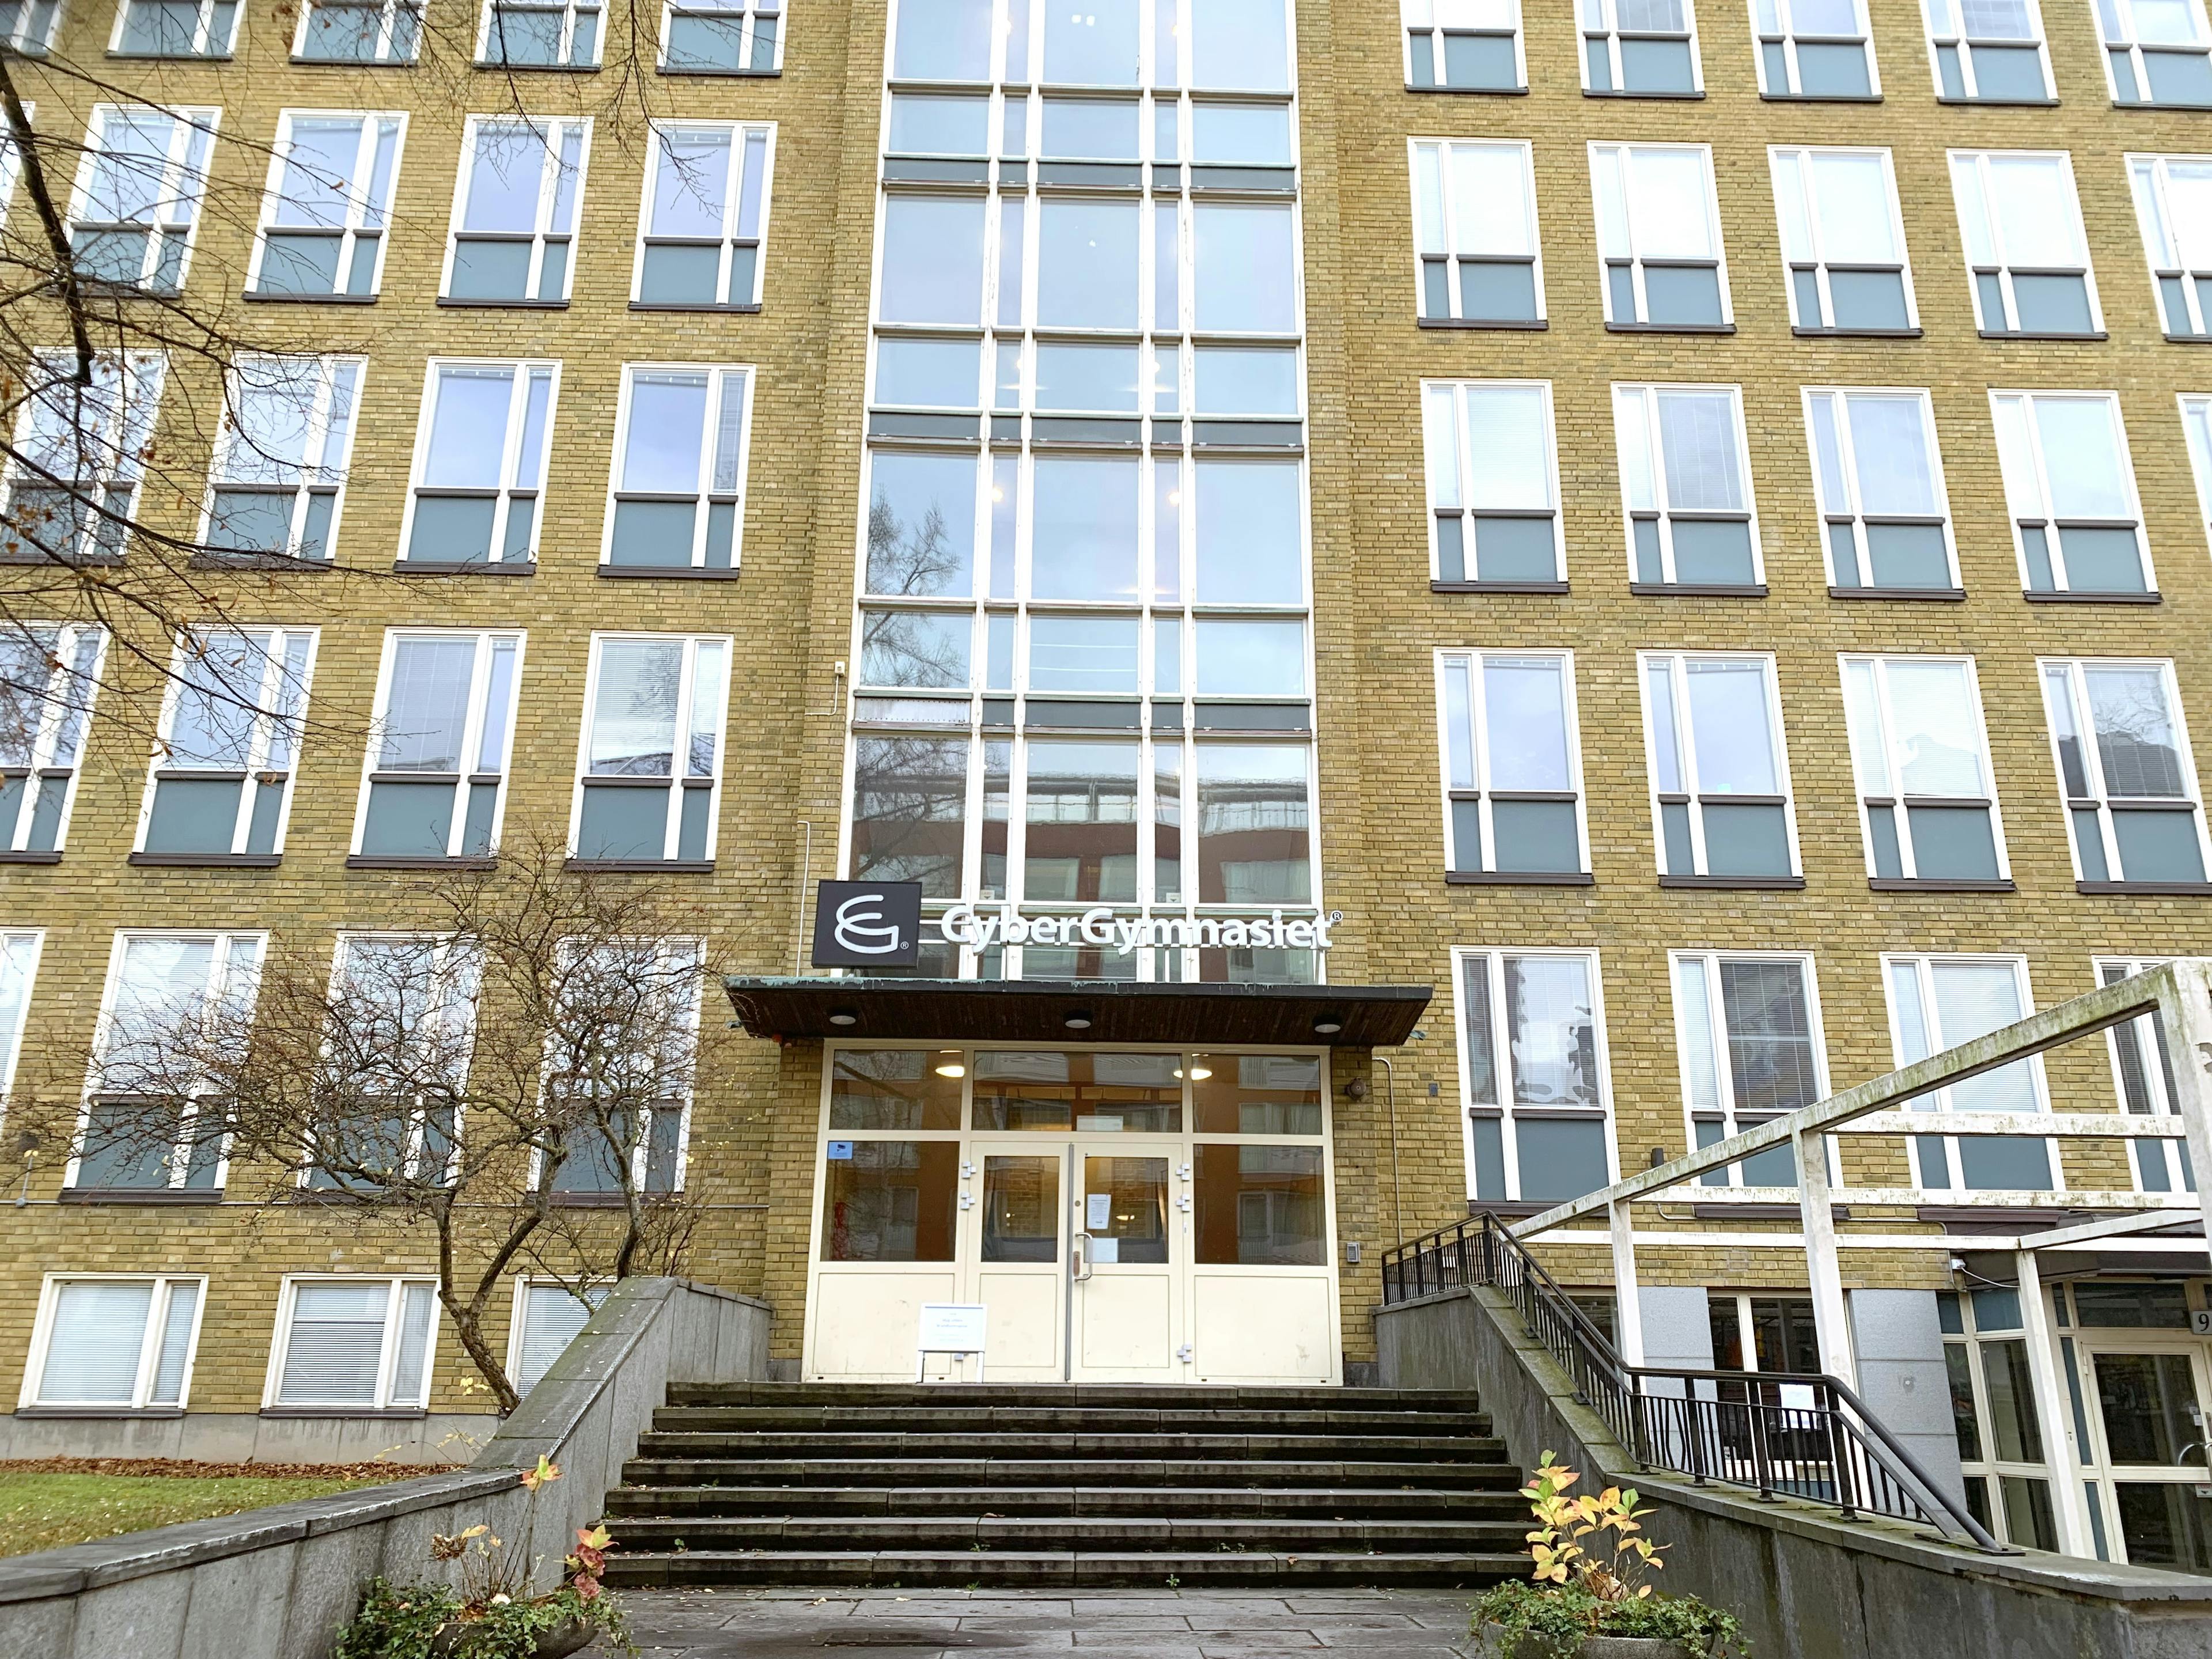 CyberGymnasiet Stockholms skolbyggnad.